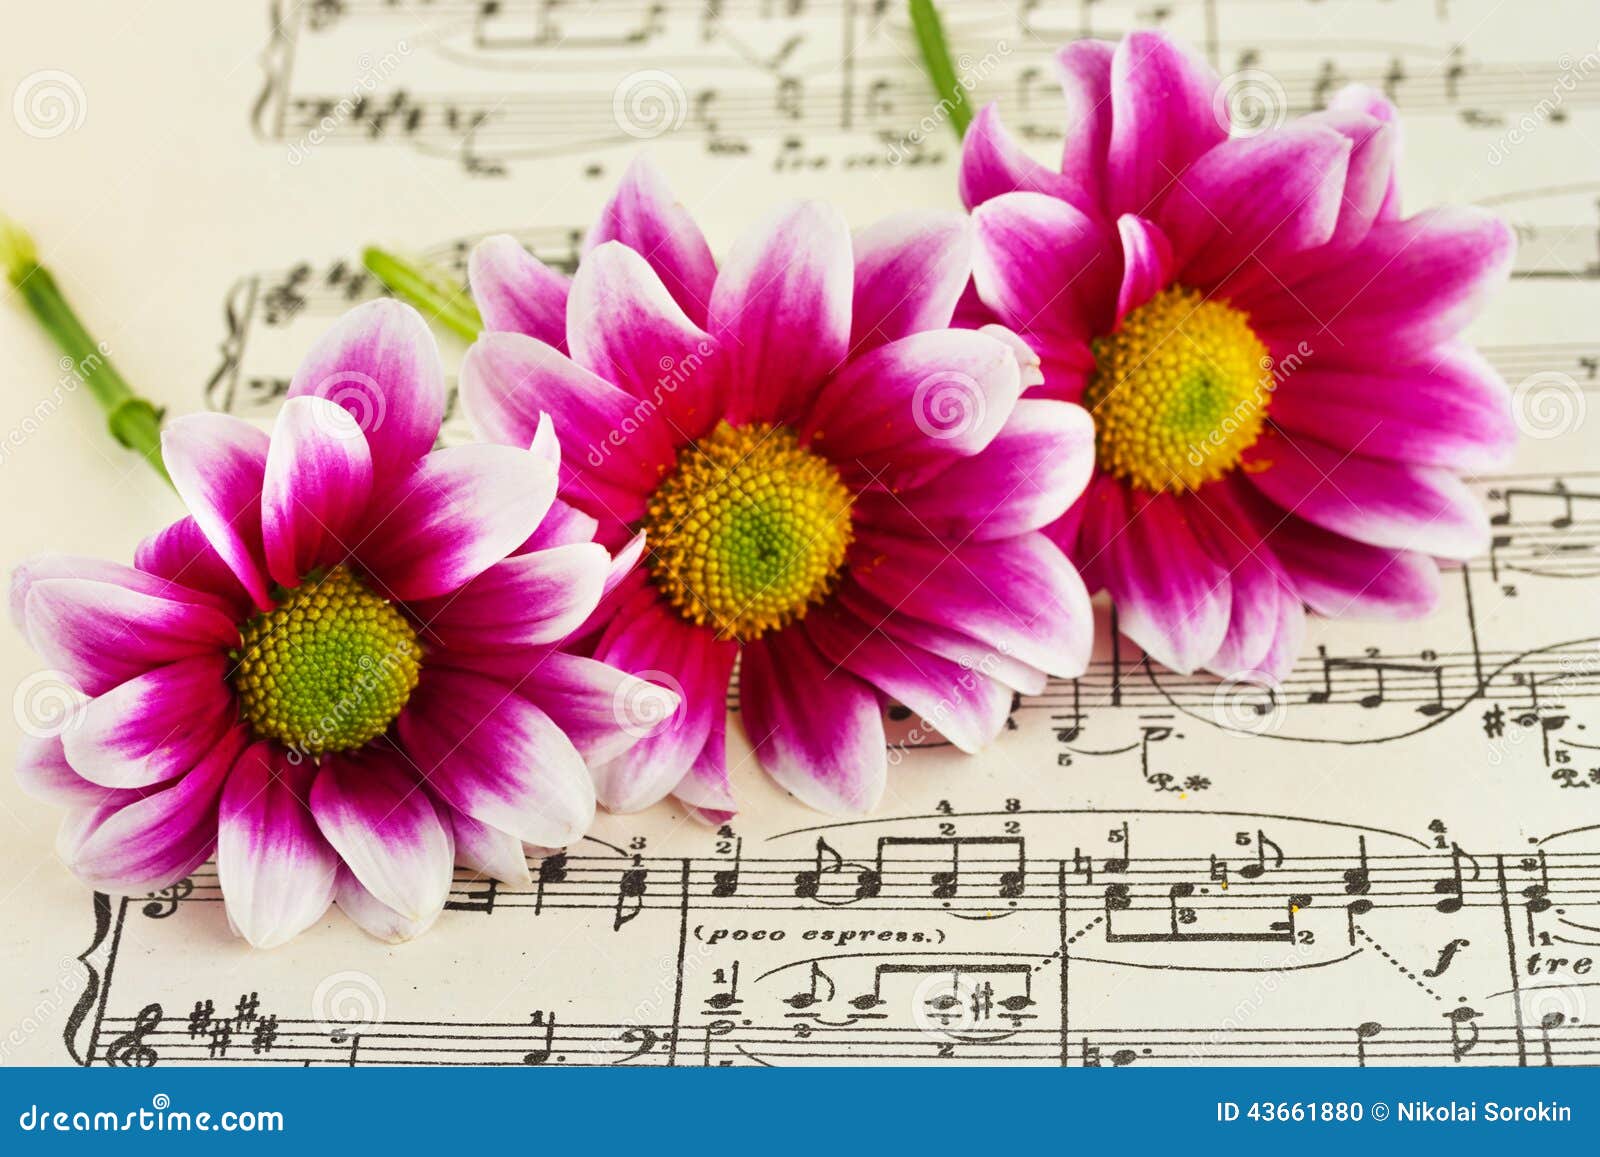 flowers on sheet music